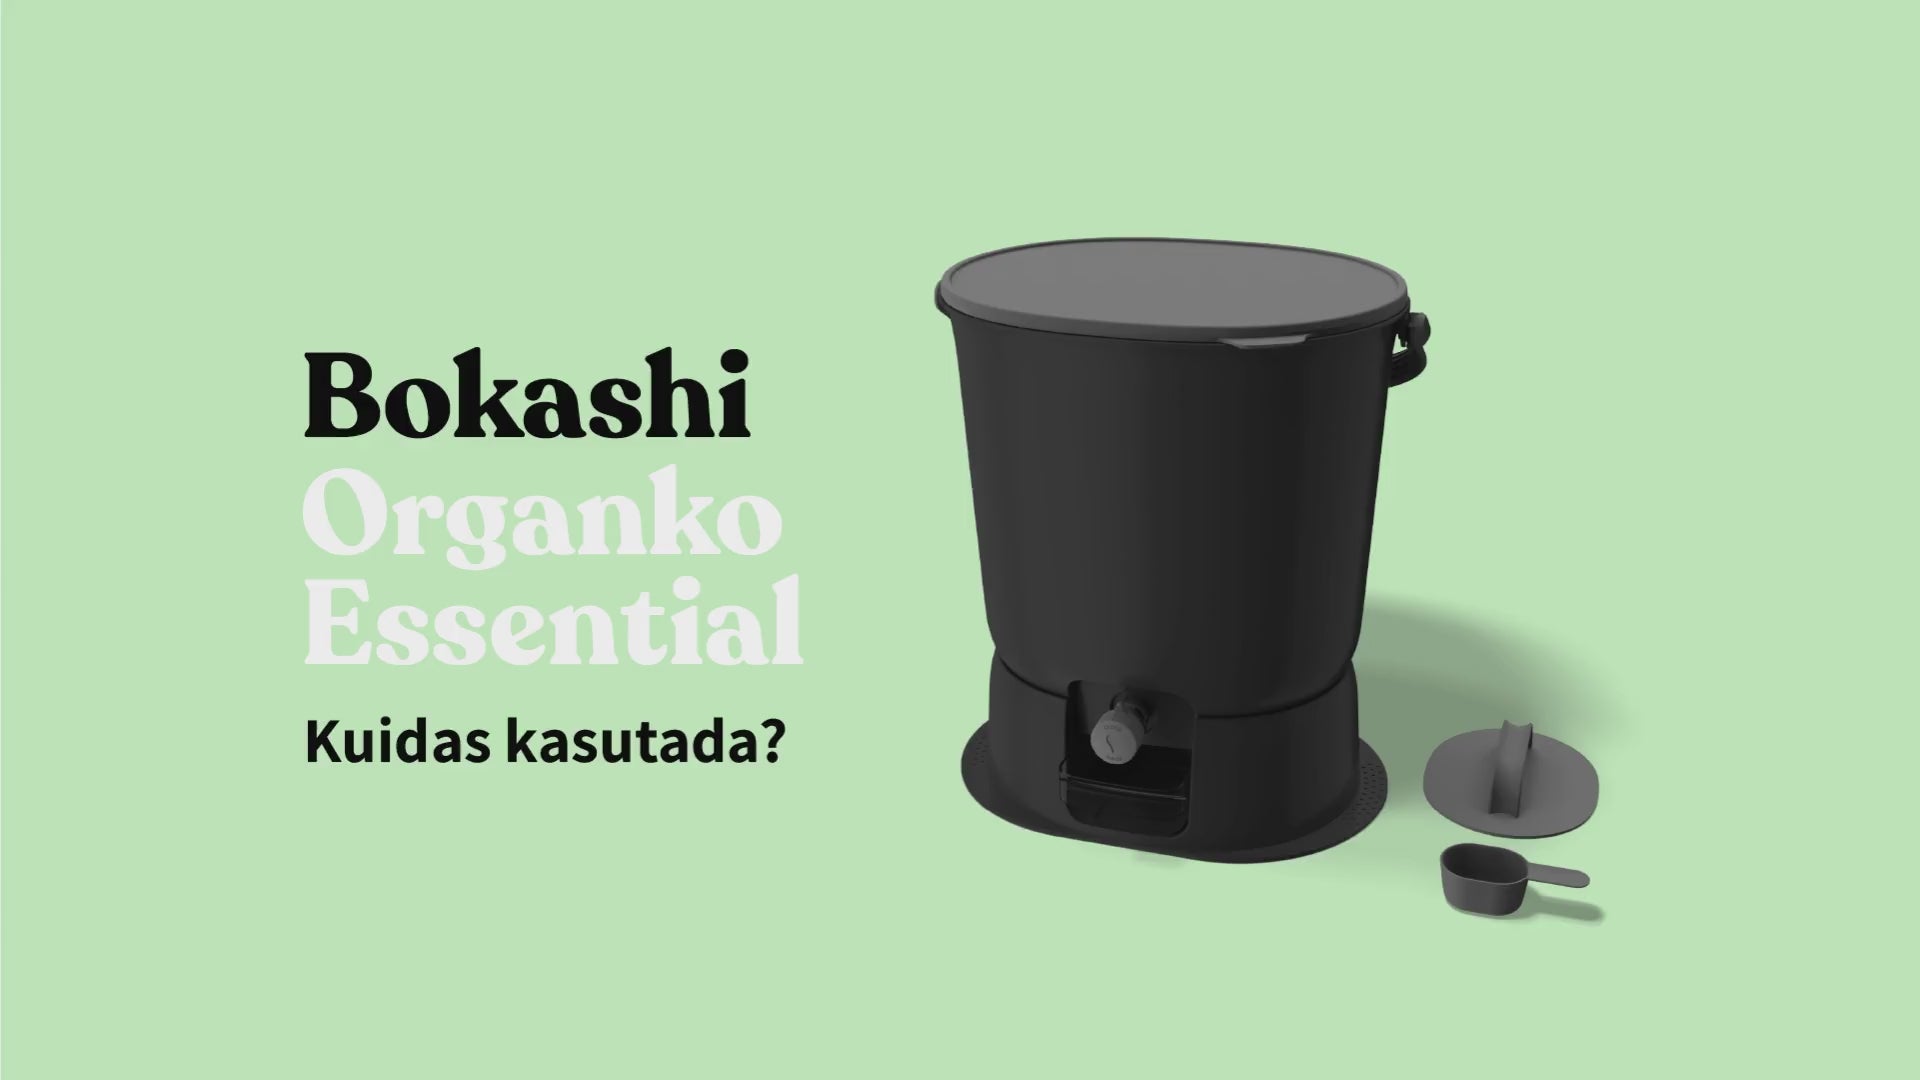 Laadi video: Bokashi Organko Essential kompostri tutuvustav video